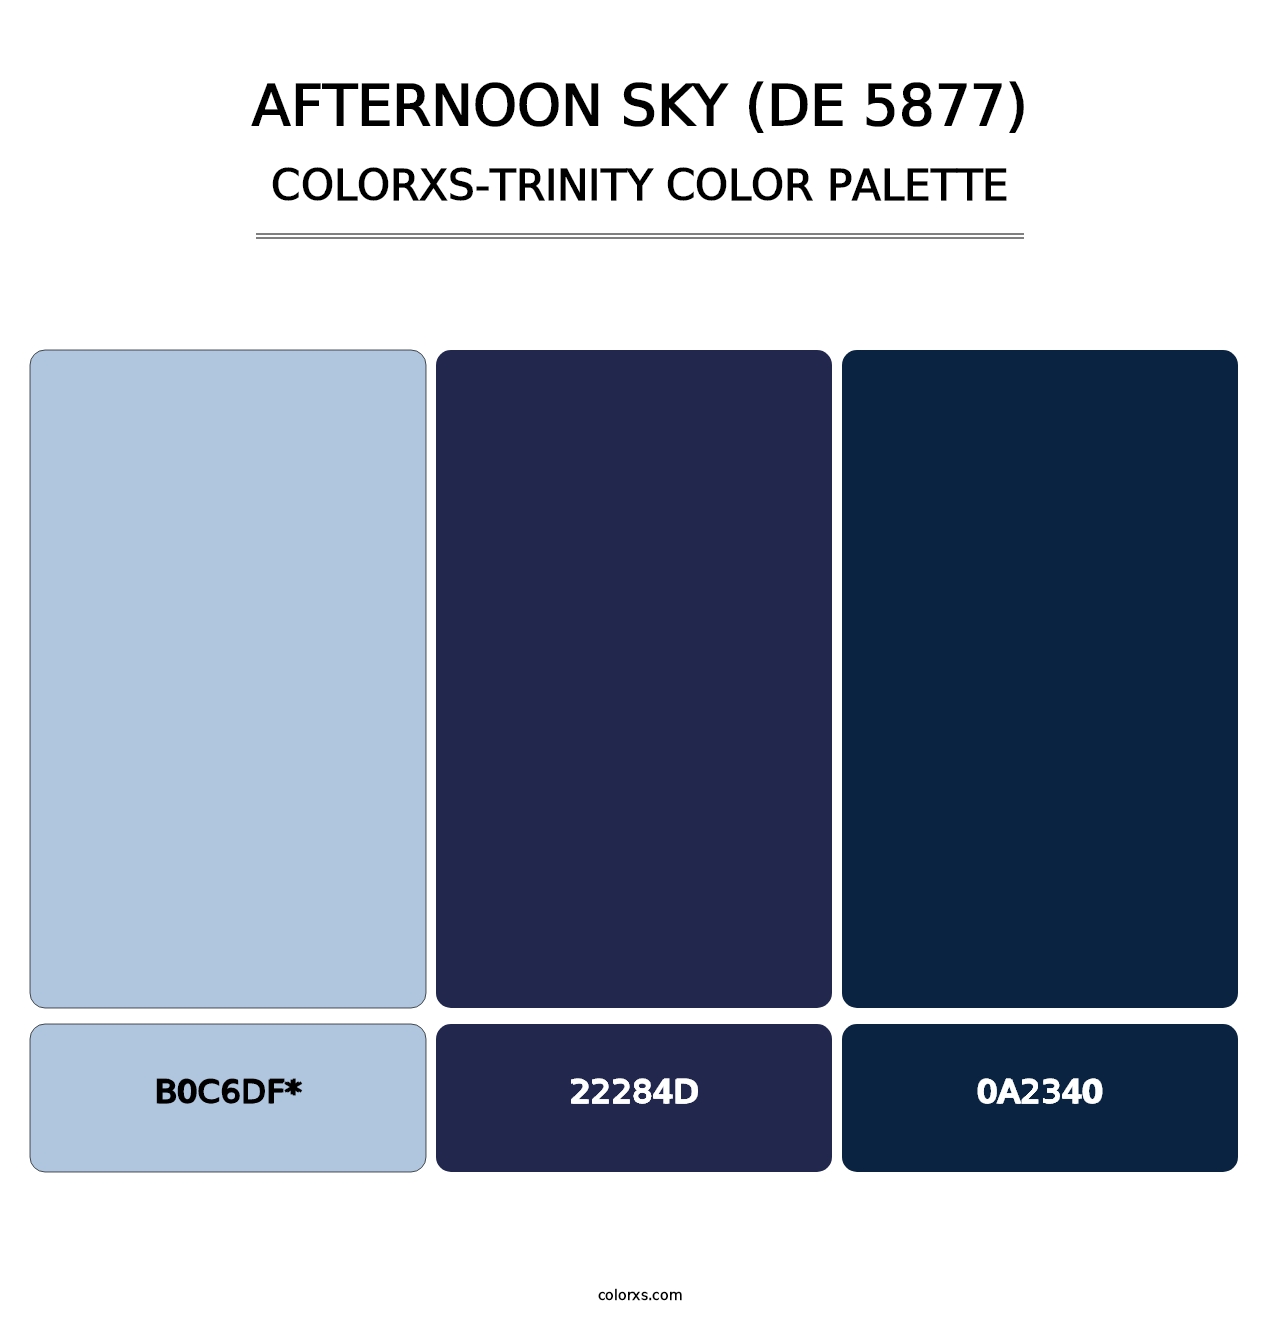 Afternoon Sky (DE 5877) - Colorxs Trinity Palette